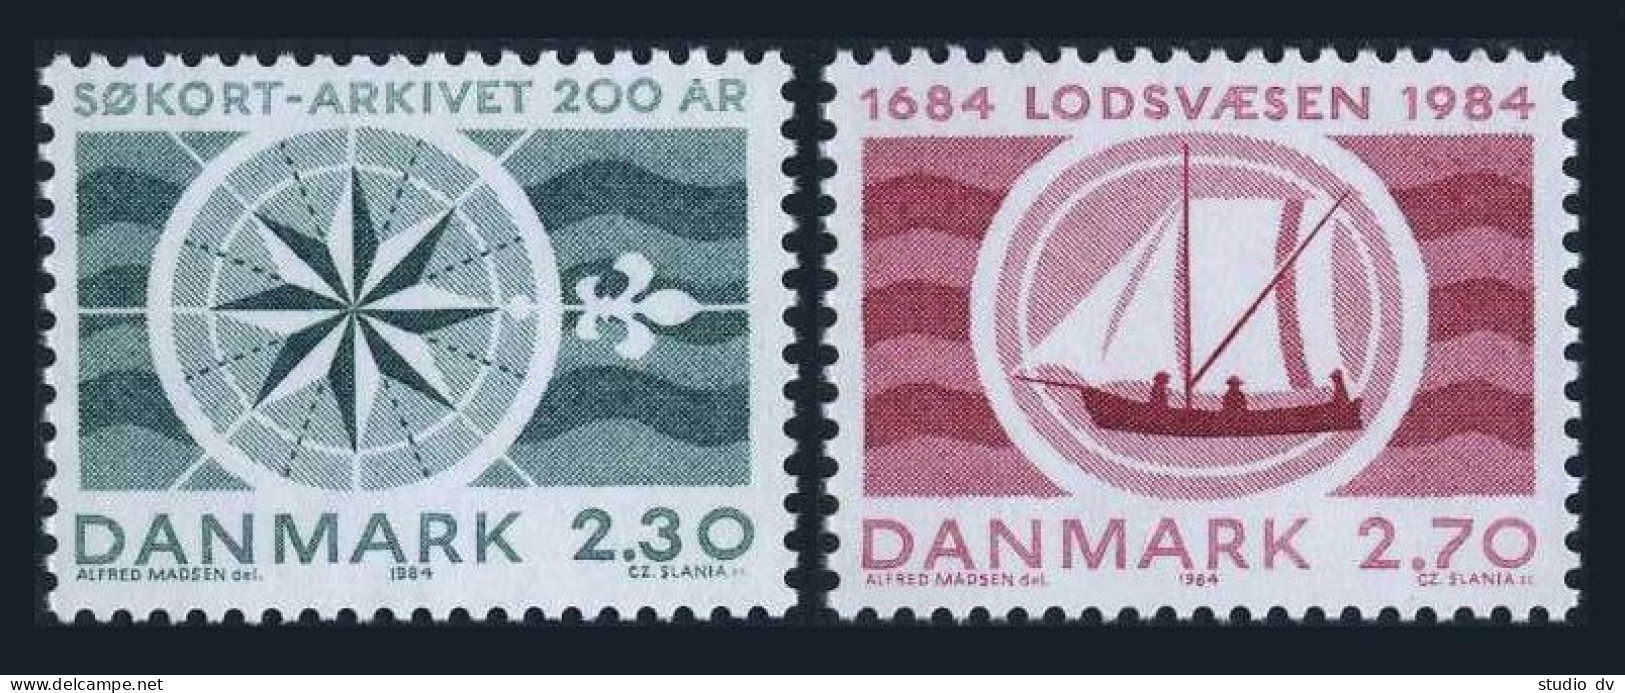 Denmark 751-752,MNH.Michel 802-803. Hydro-graphic Dept;Pilotage Service,1984. - Nuovi